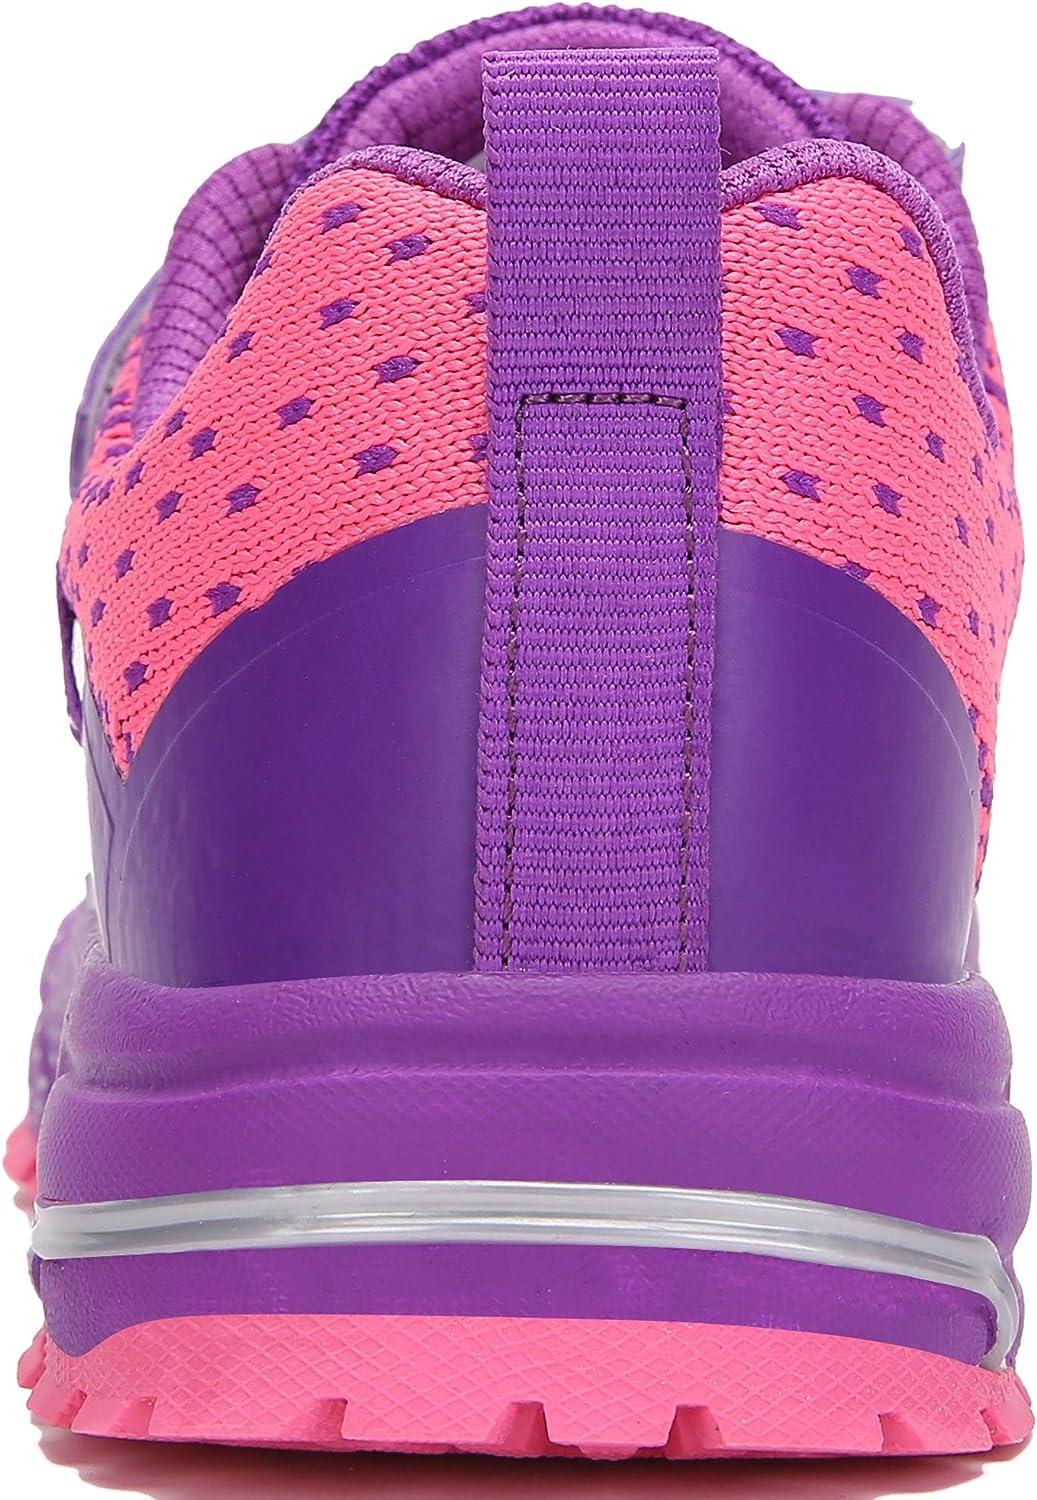 purple shoes for boys